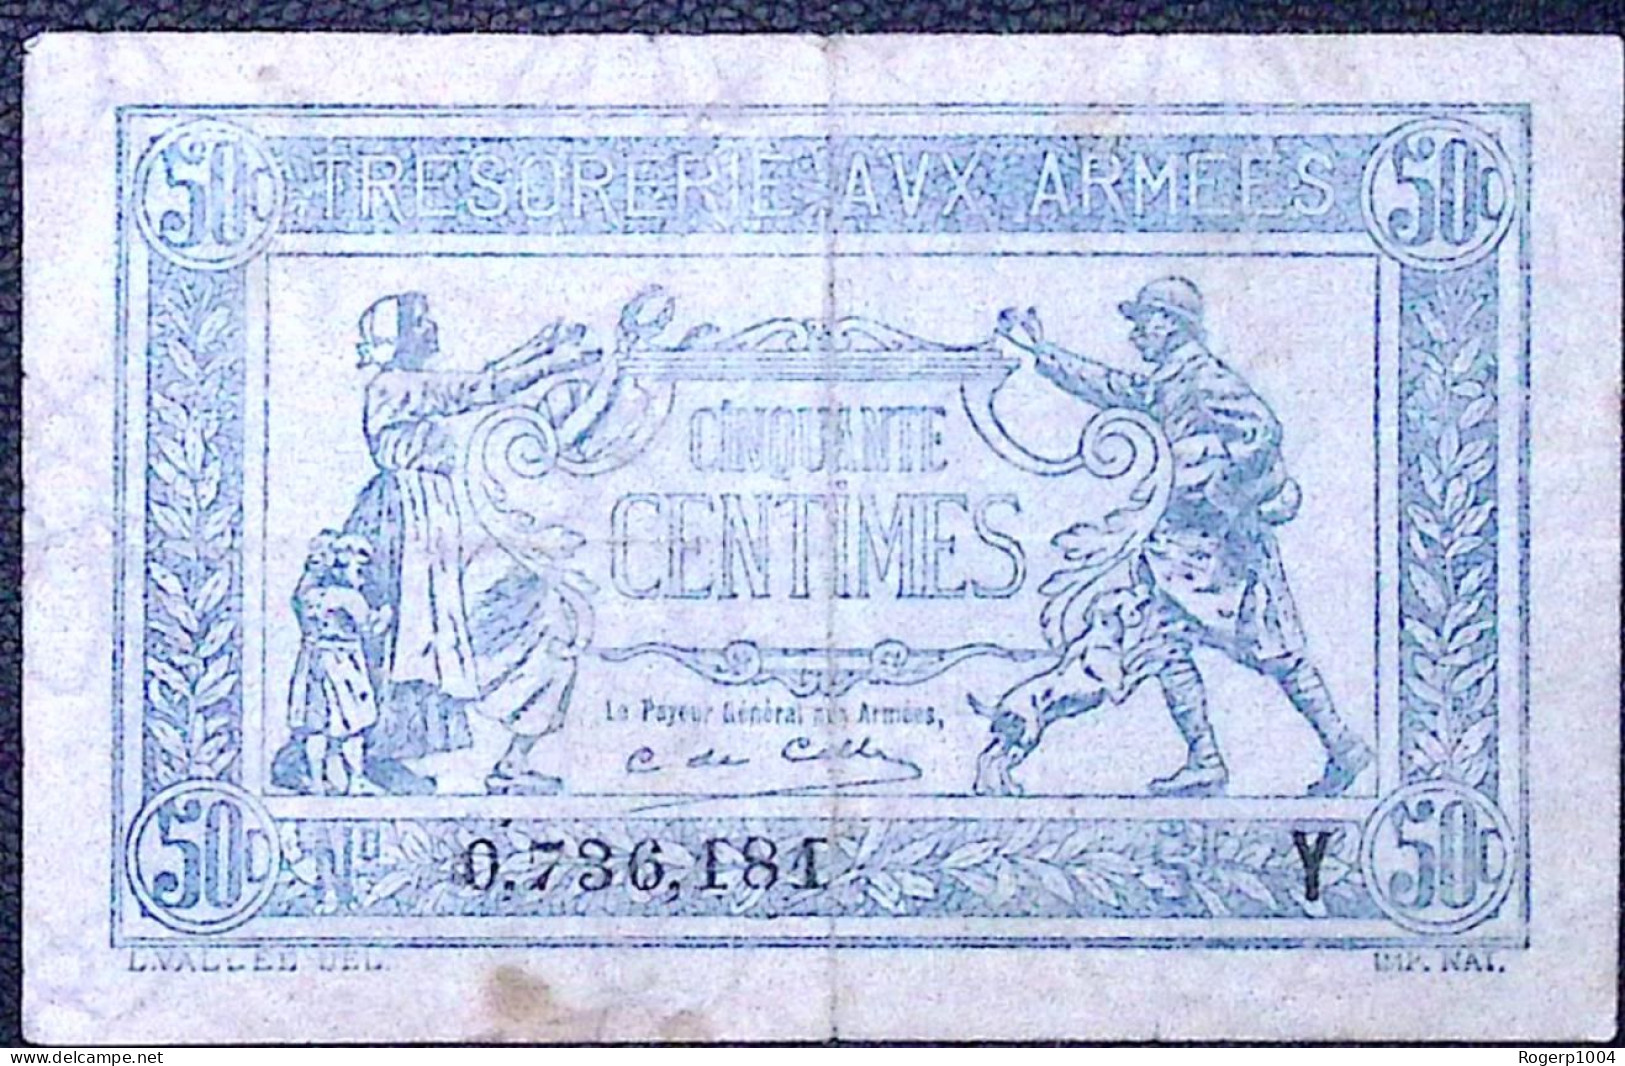 FRANCE * TRESORERIE AUX ARMEES * 1919 * Série Y * Fay. VF.02.08 * État/Grade TB+/FF - 1917-1919 Army Treasury